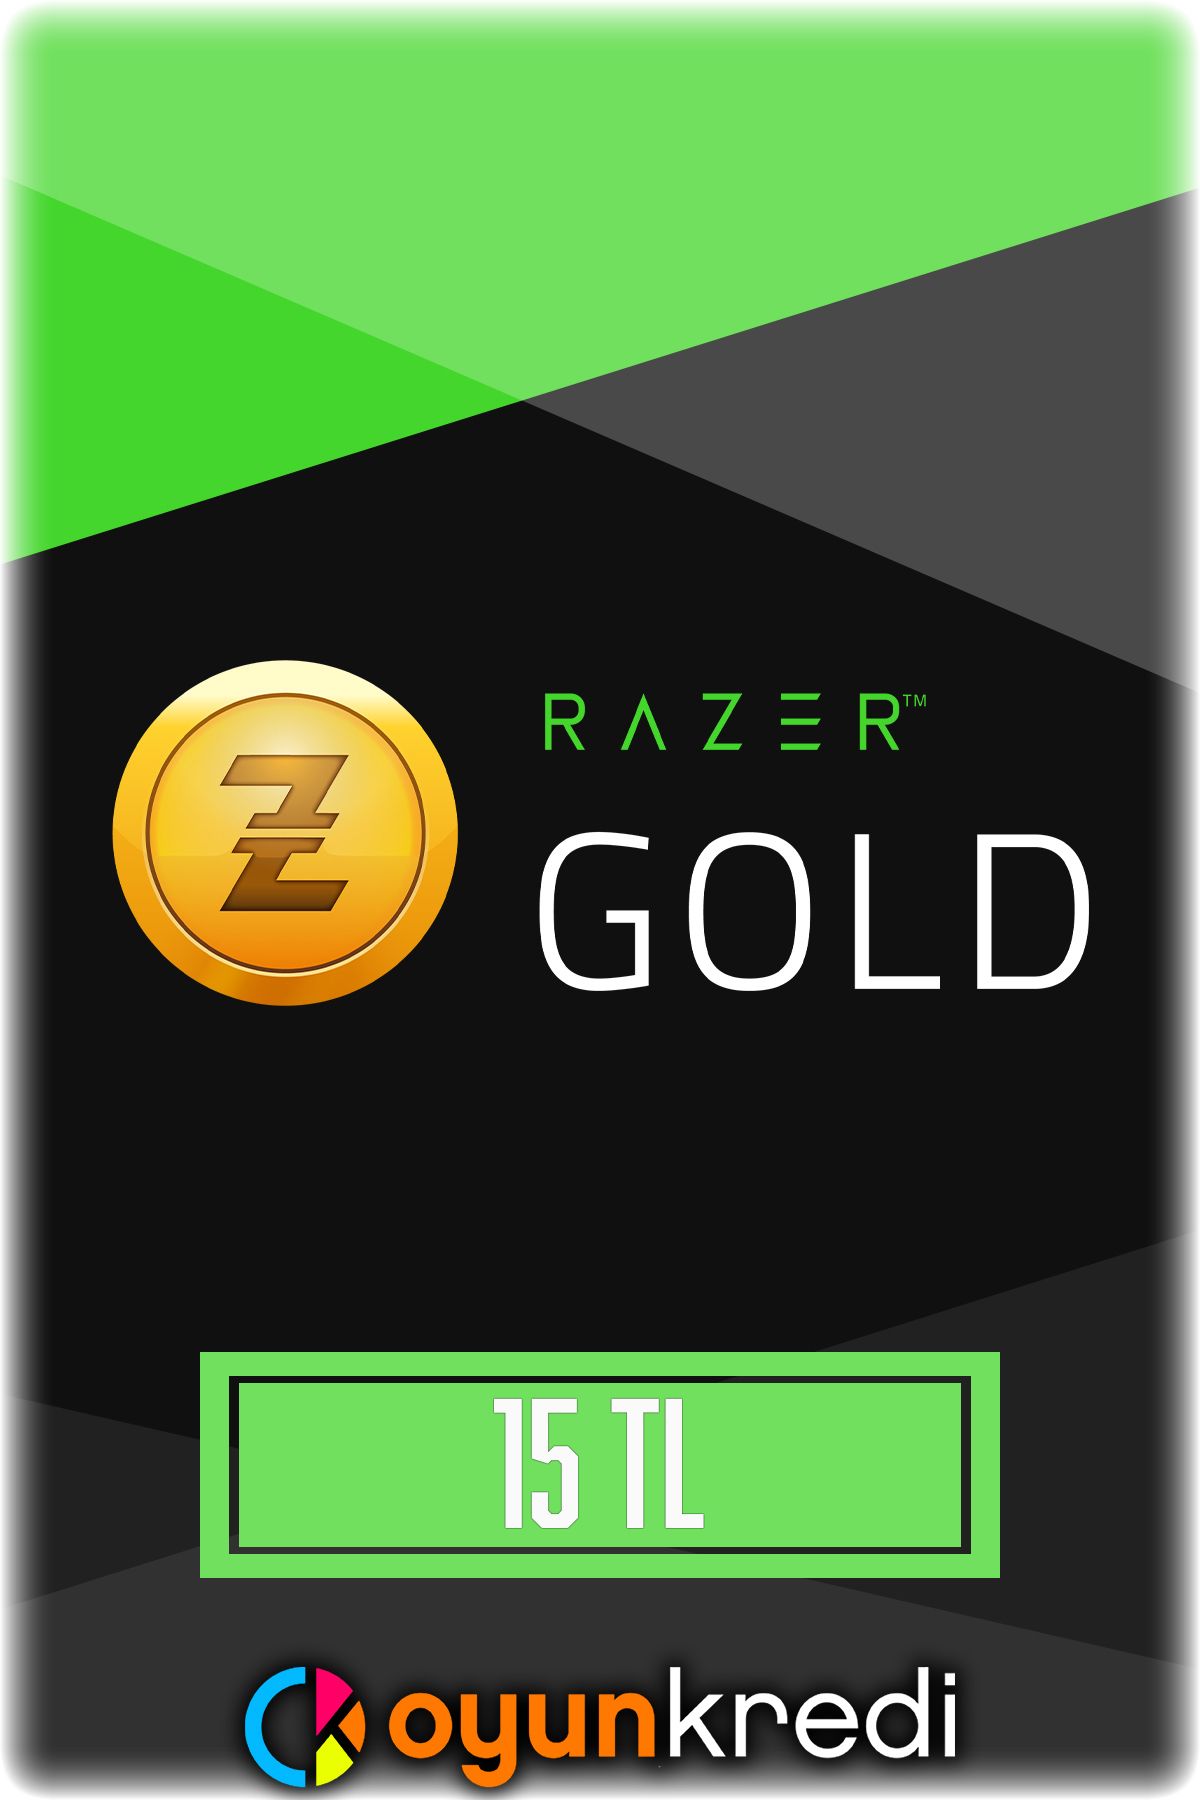 RAZER Gold Pin 15 TL